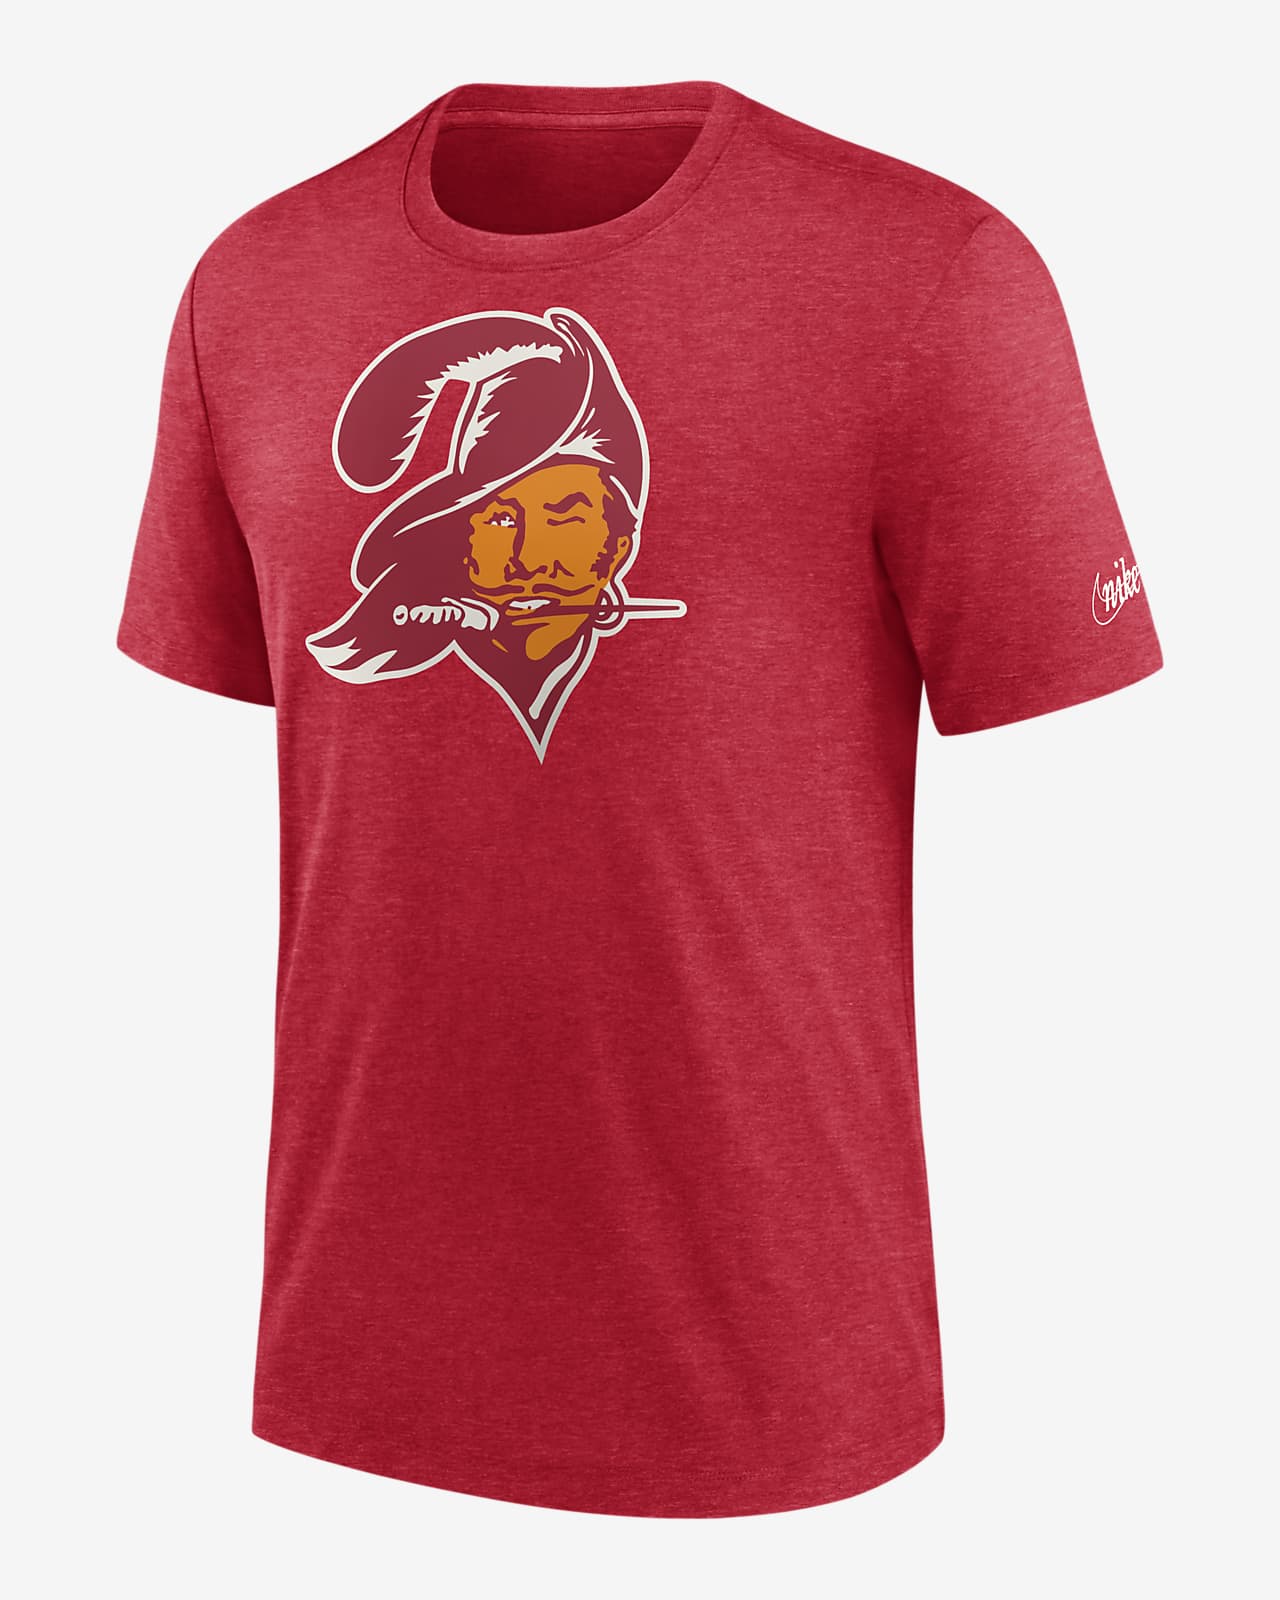 Tampa Bay Buccaneers Rewind Logo Nike Men's NFL T-Shirt in Red, Size: Small | NJFDEX489YV-067